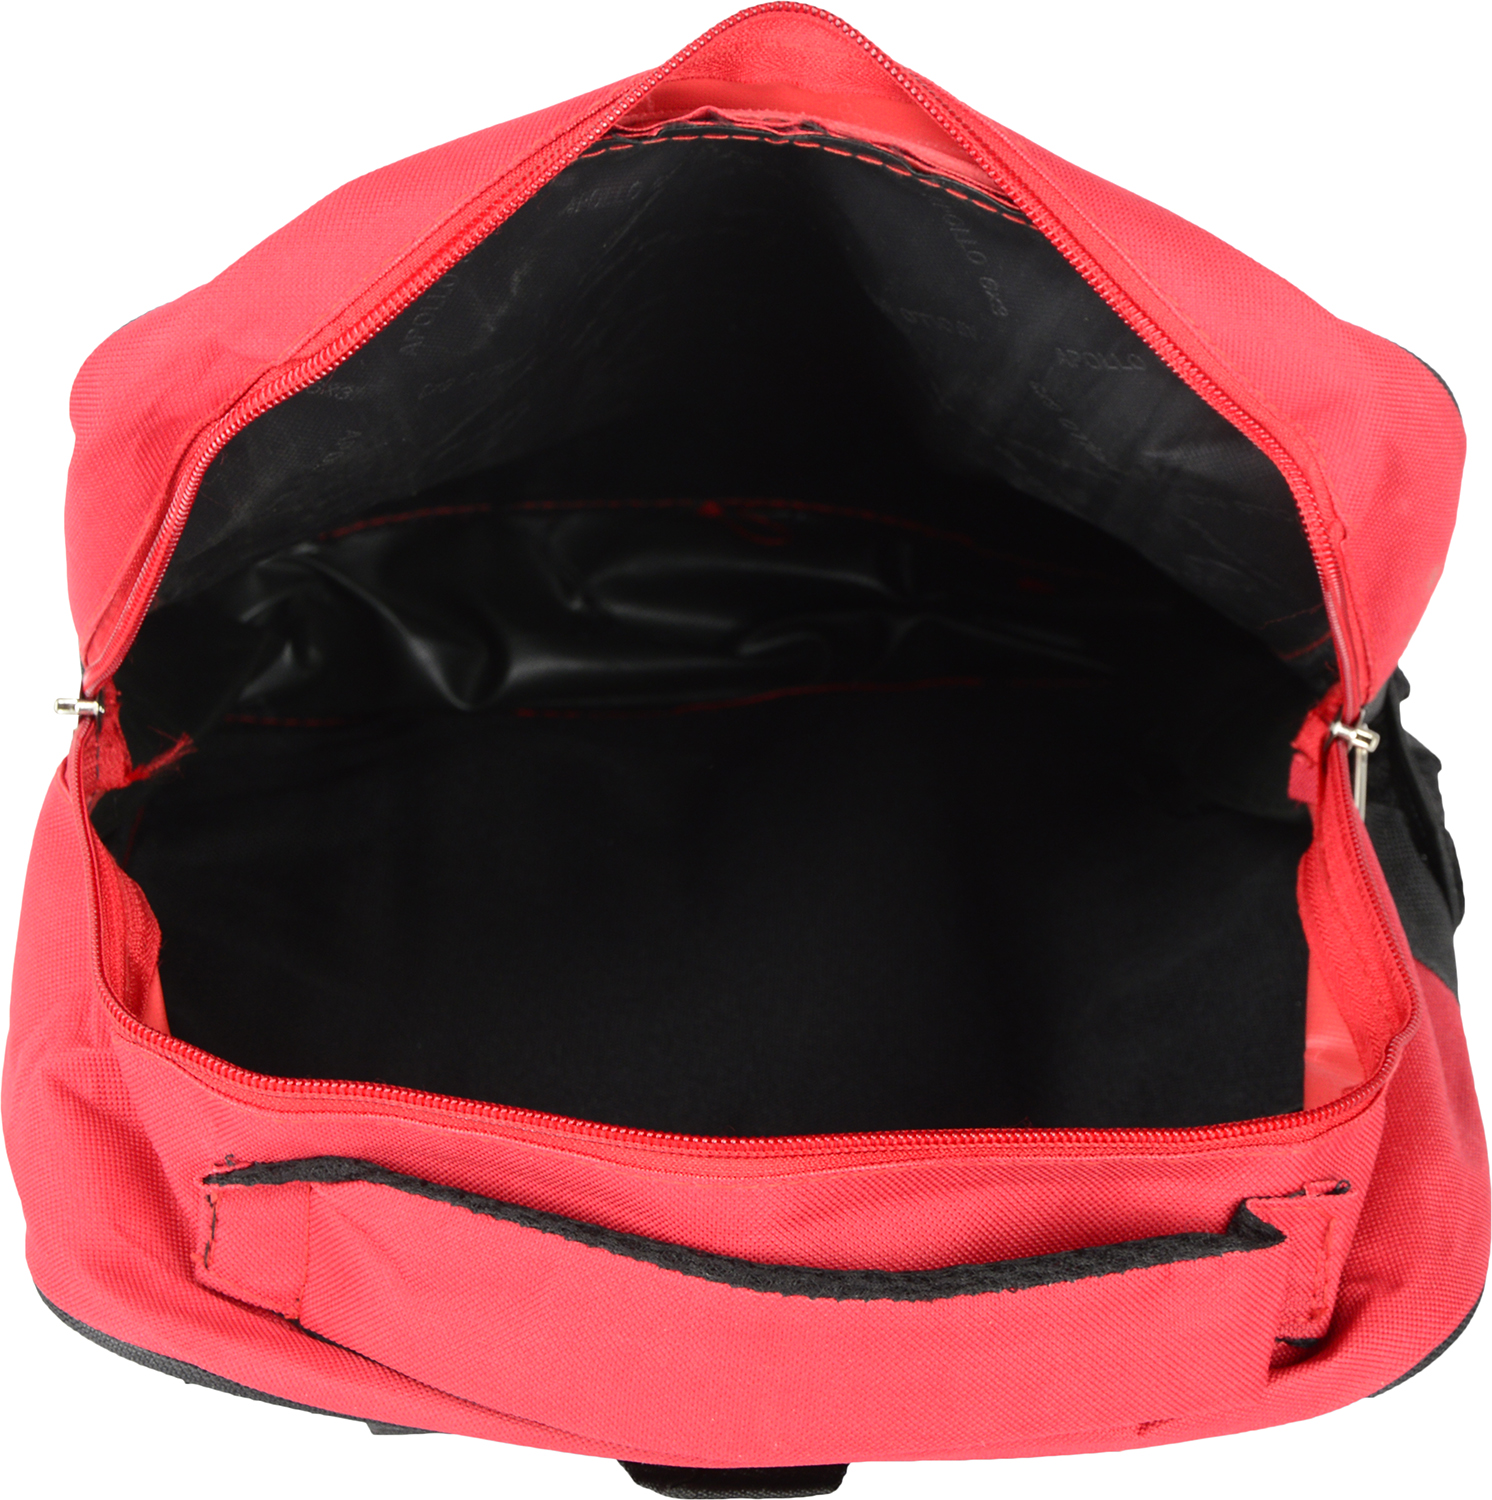 Buy Intex Laptop Bag Online @ ₹499 from ShopClues